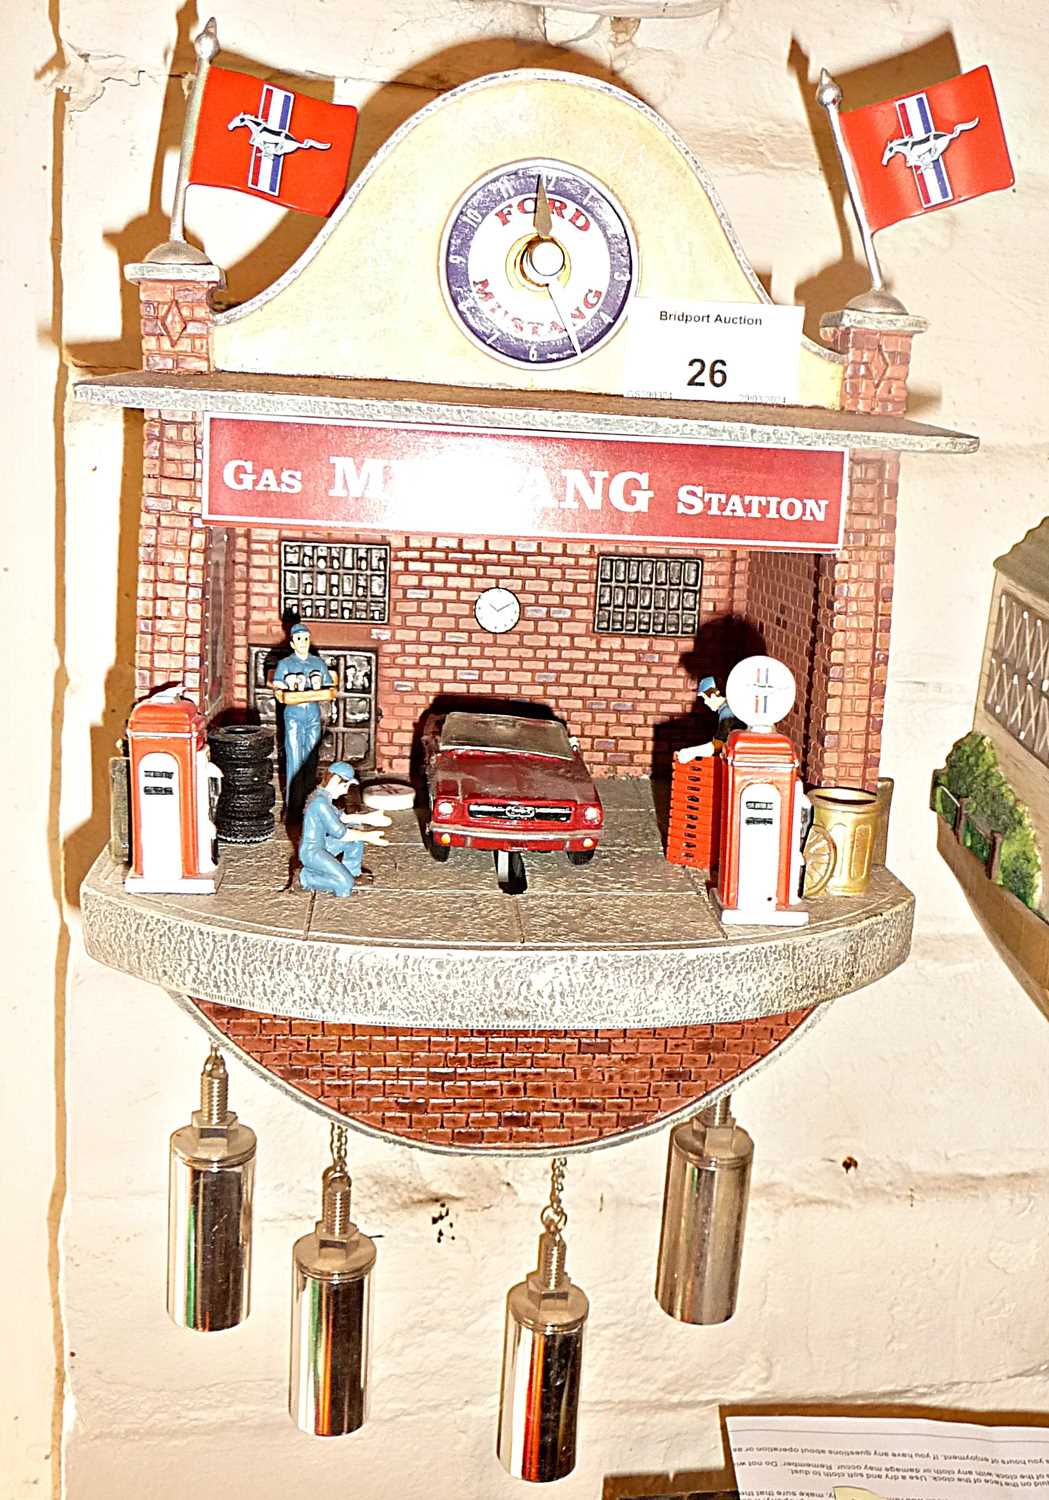 Novelty cuckoo clock "Mustang Garage" automaton depicting car mechanics' workshop